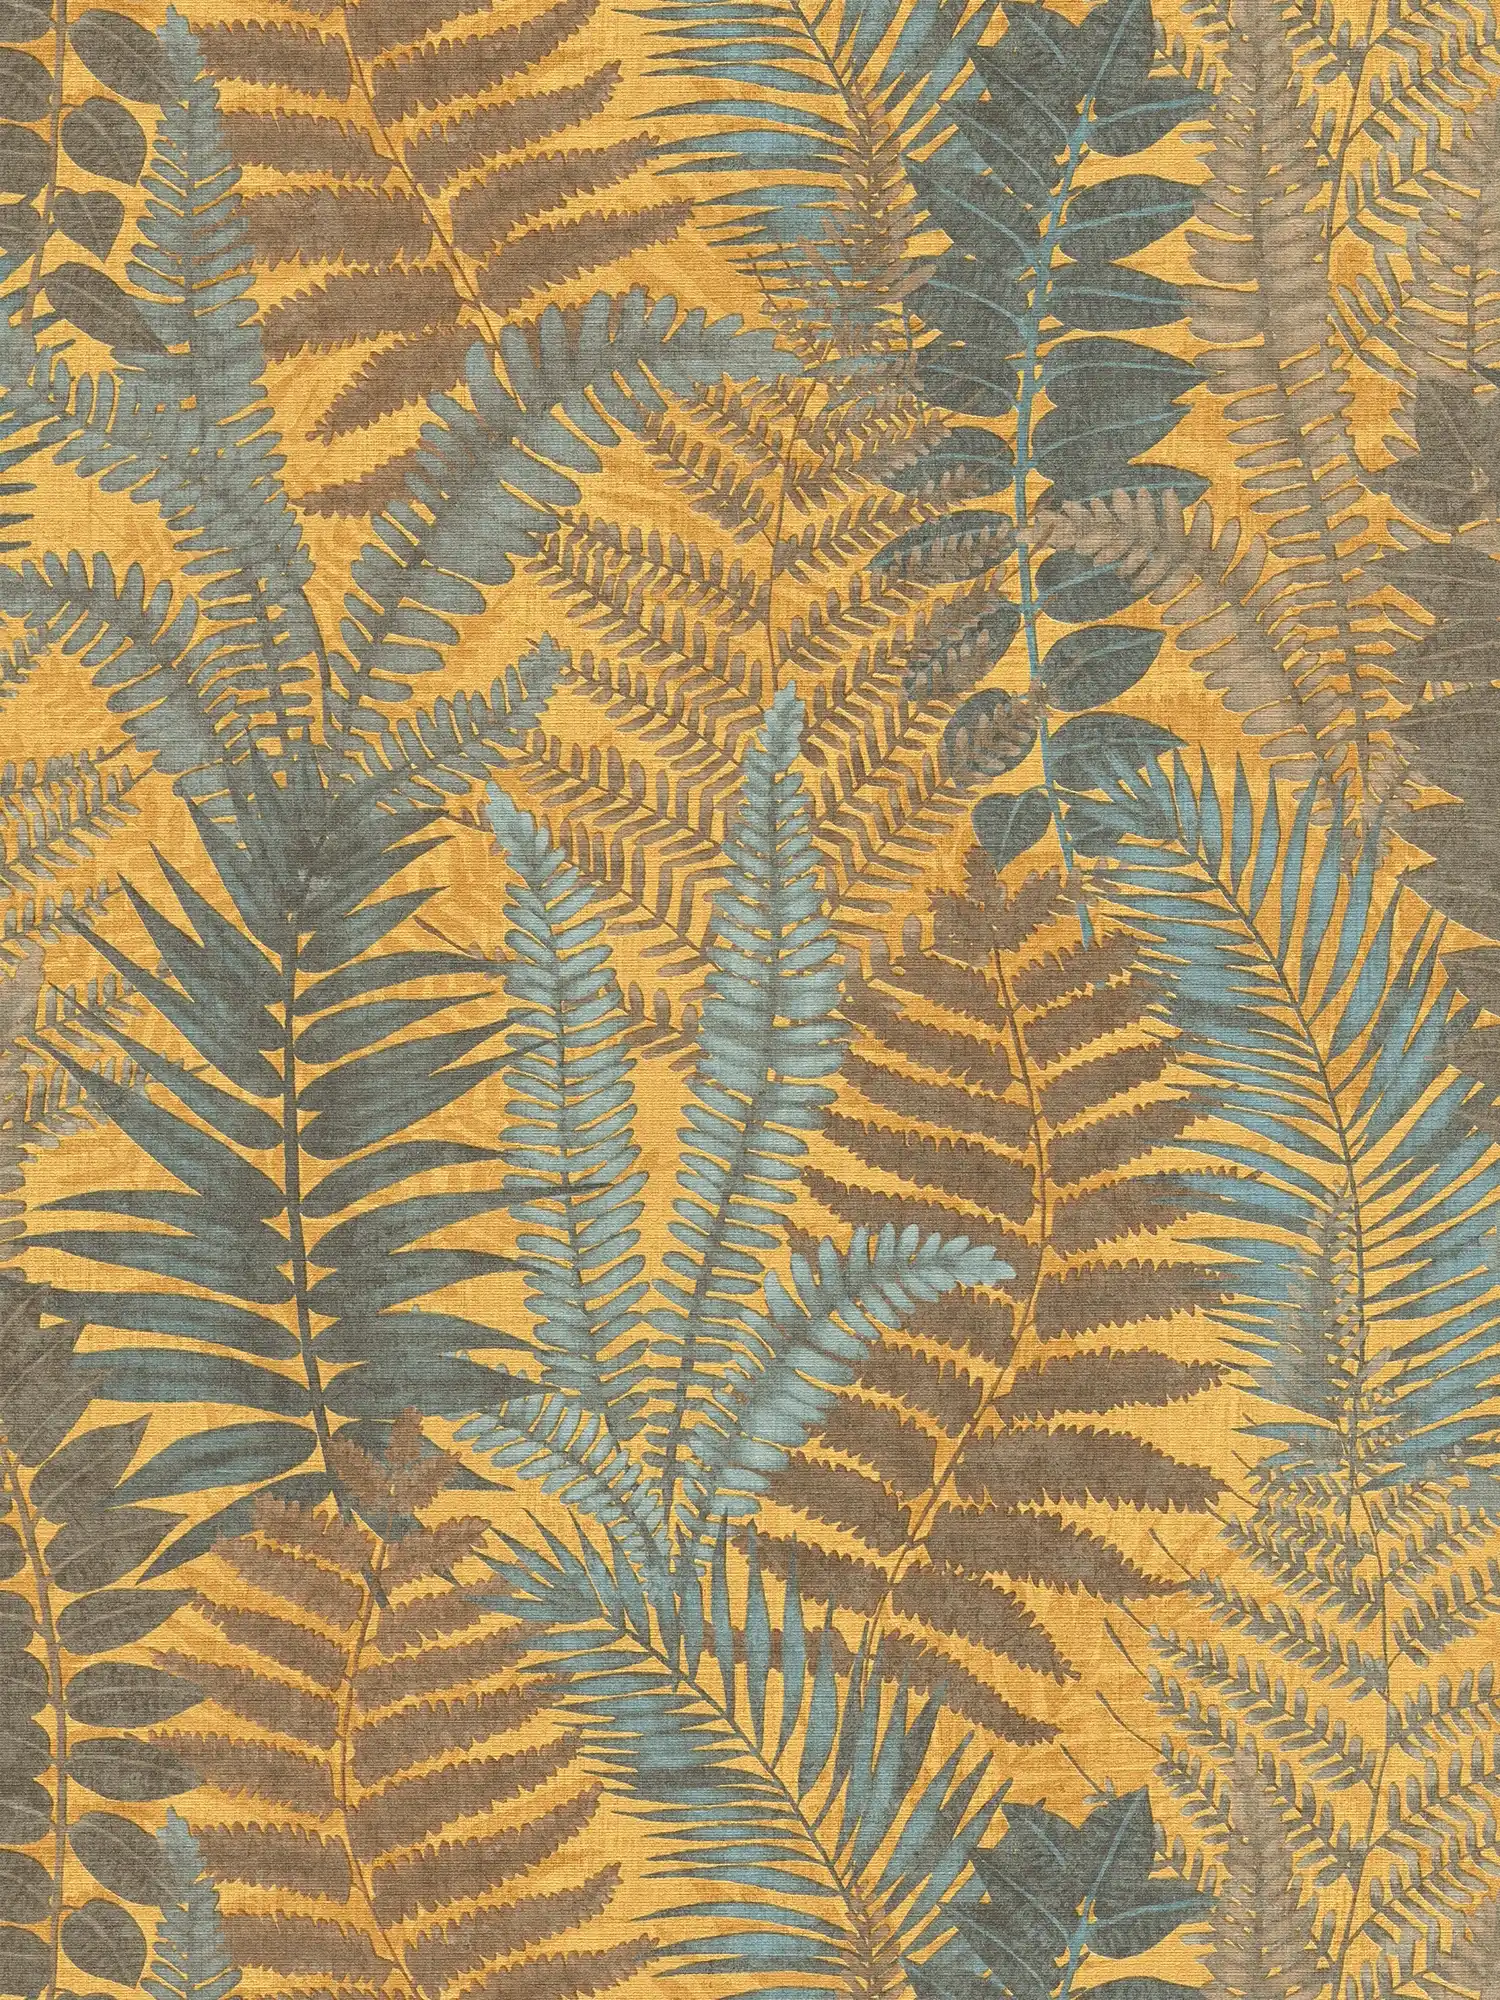         Papel pintado de estilo floral con hojas de helecho ligeramente texturadas, mate - amarillo, azul, marrón
    